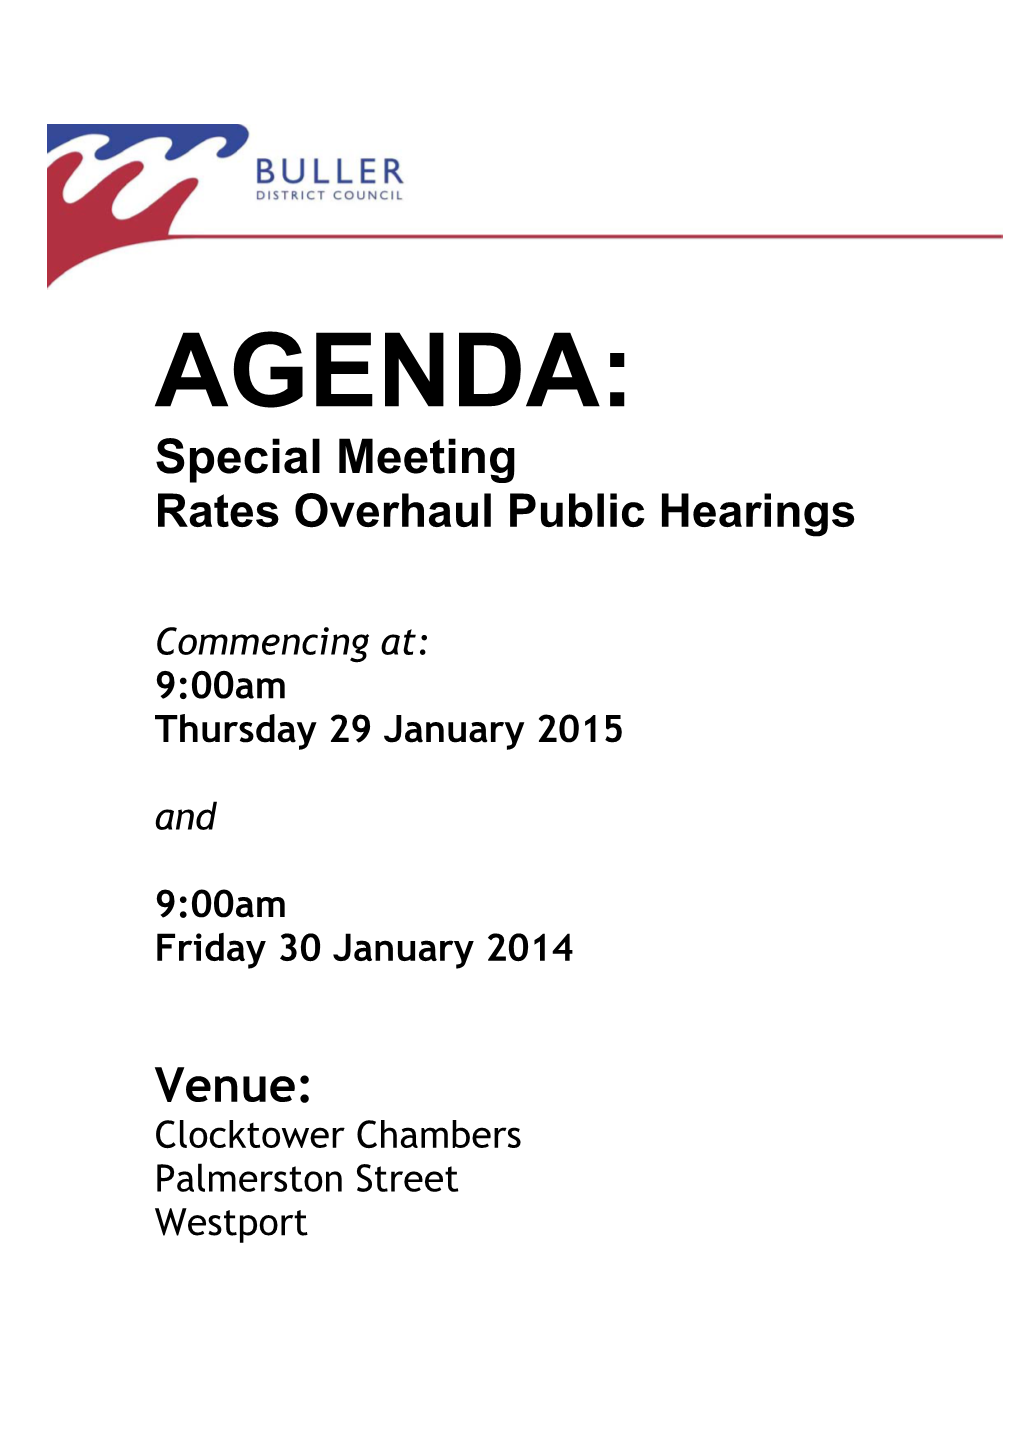 AGENDA: Special Meeting Rates Overhaul Public Hearings